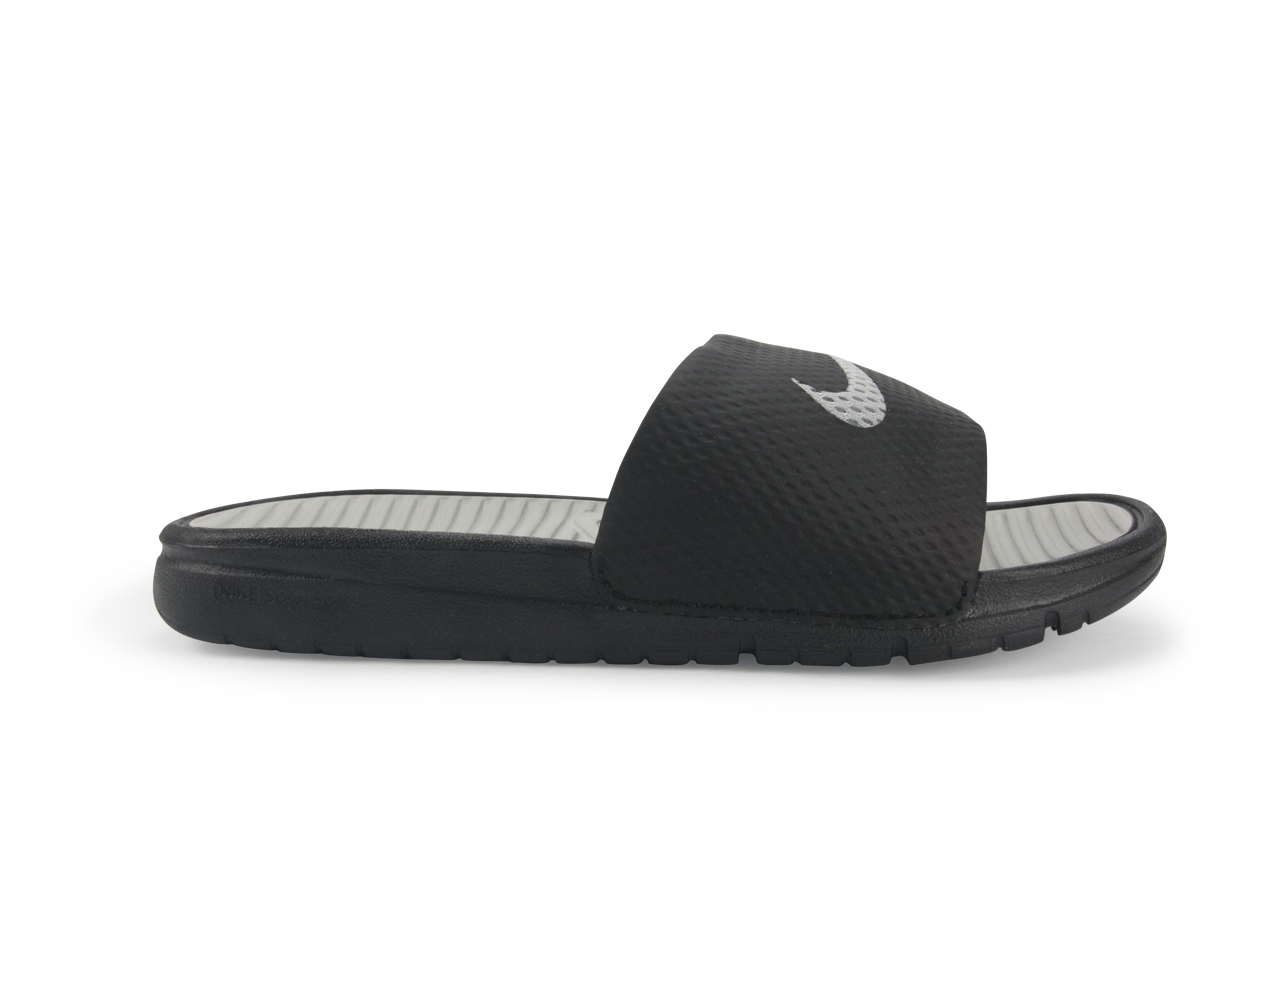 Nike Men's Benassi Solarsoft Slide Sandles Black/Metallic Silver